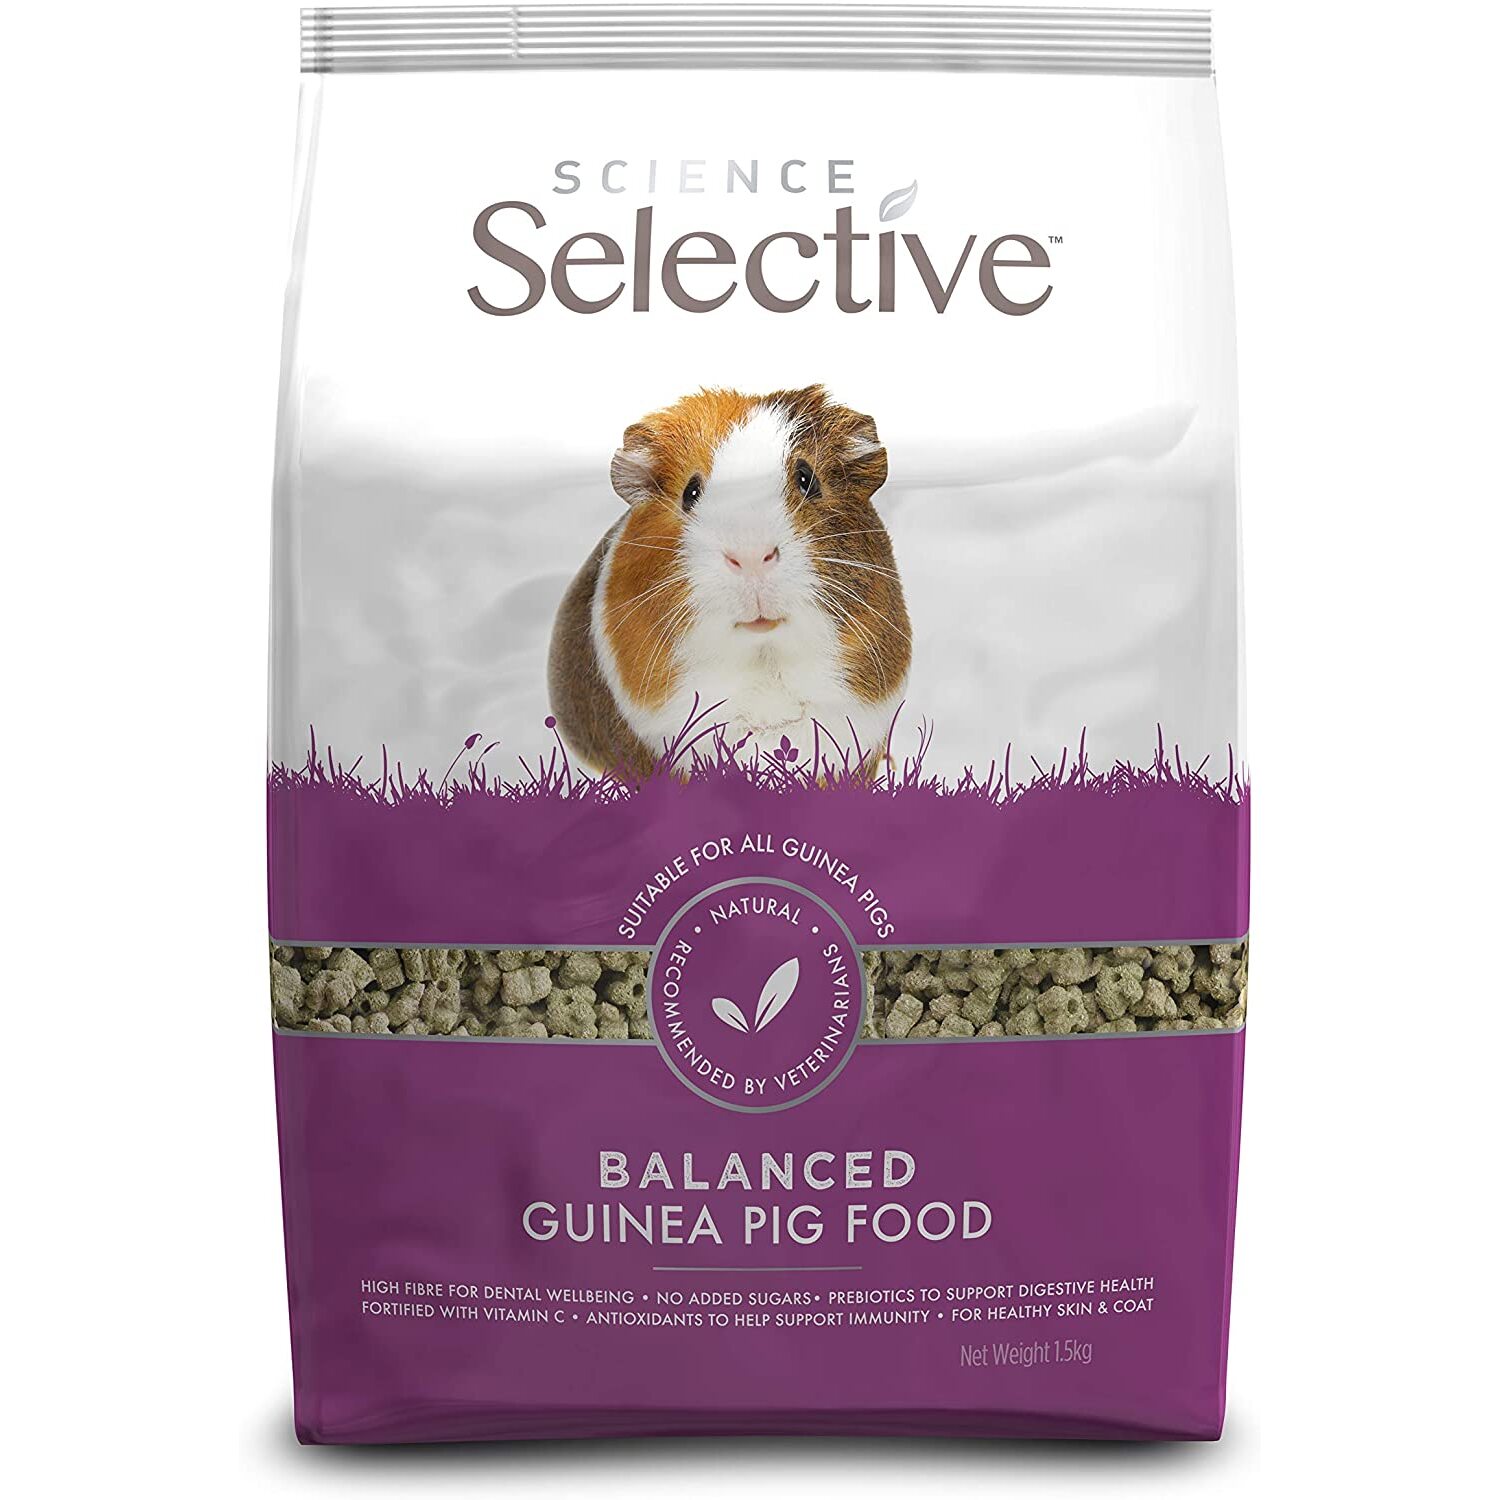 Science Selective Balanced Guinea Pig Food 1.5 Kg Image 1